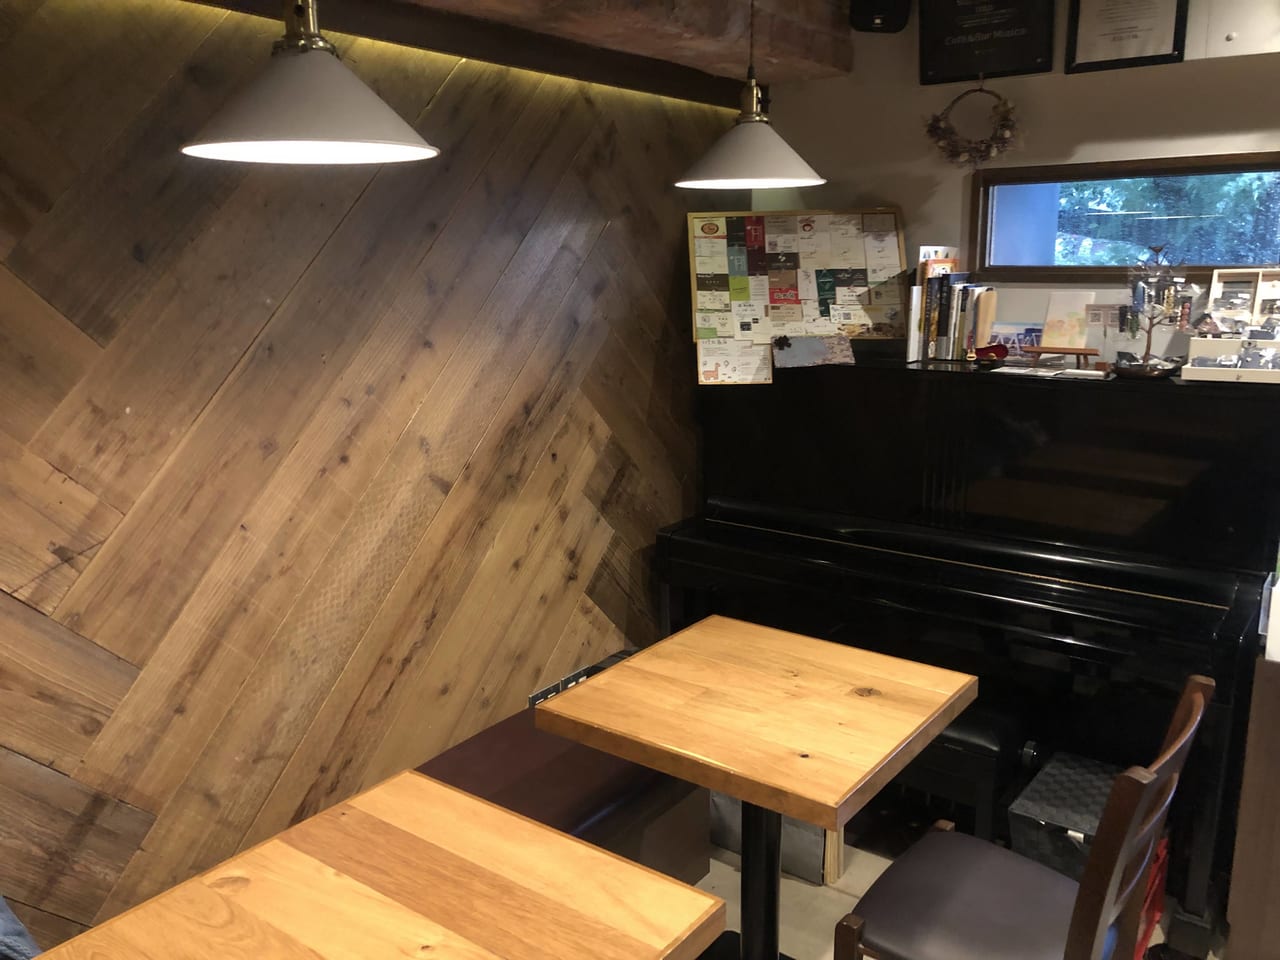 Cafe & Bar Musica